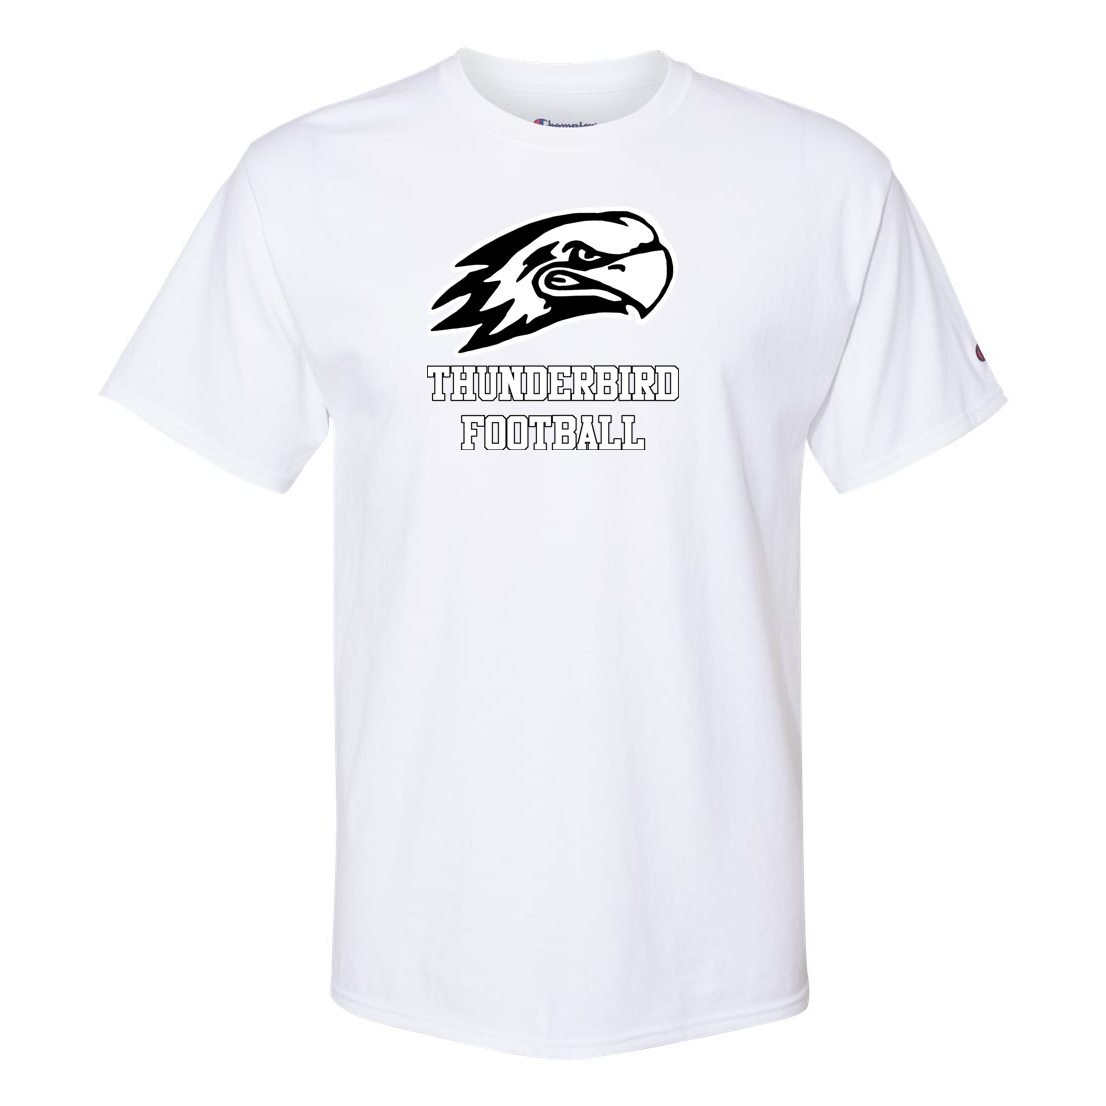 Chautuauqua Lake Football  Champion Short Sleeve T-Shirt